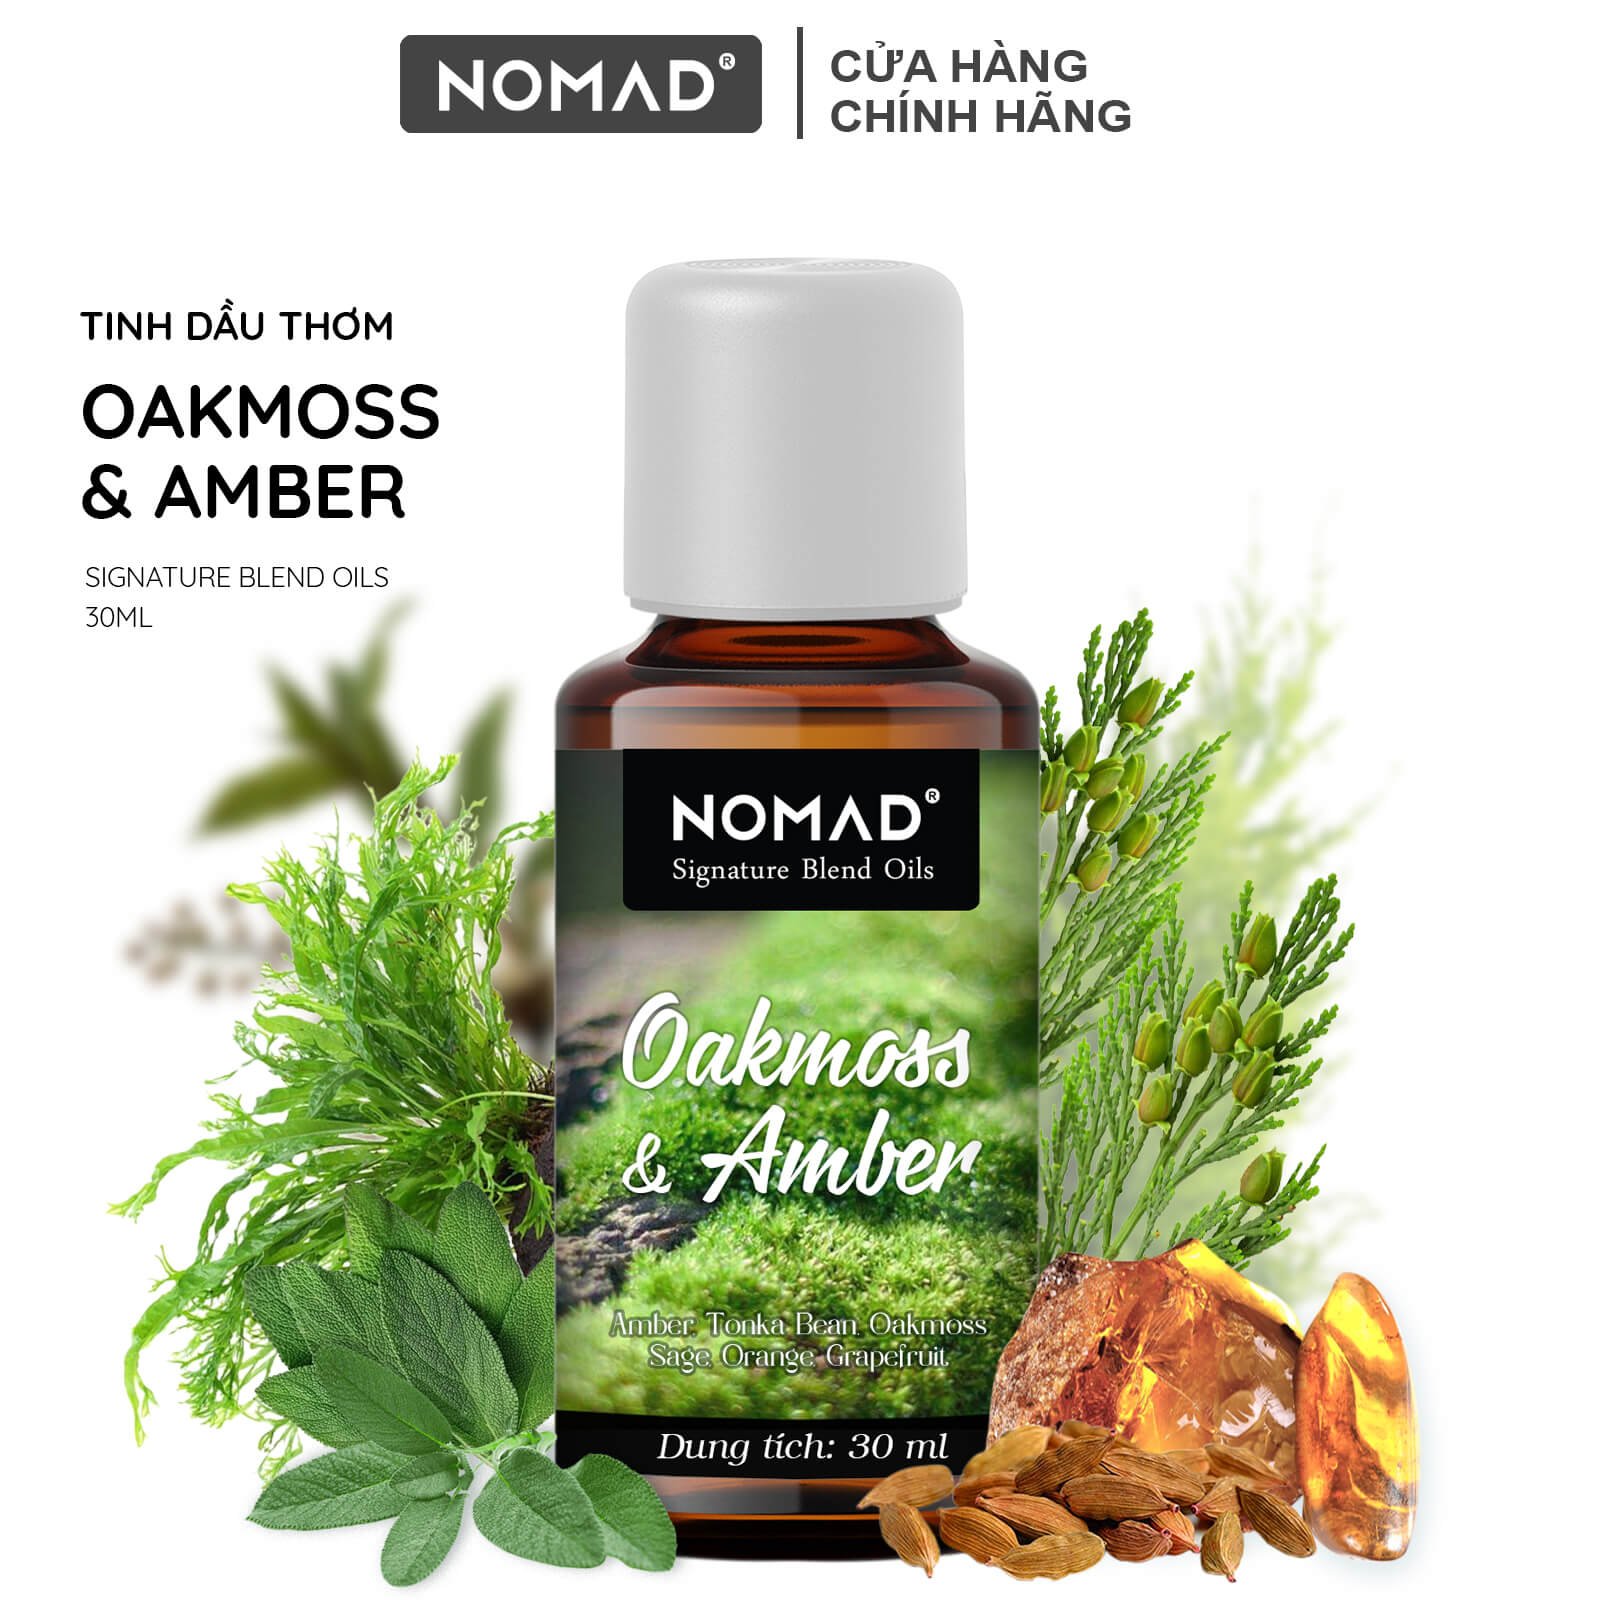 tinh-dau-thom-nomad-signature-blend-oils-oakmoss-amber